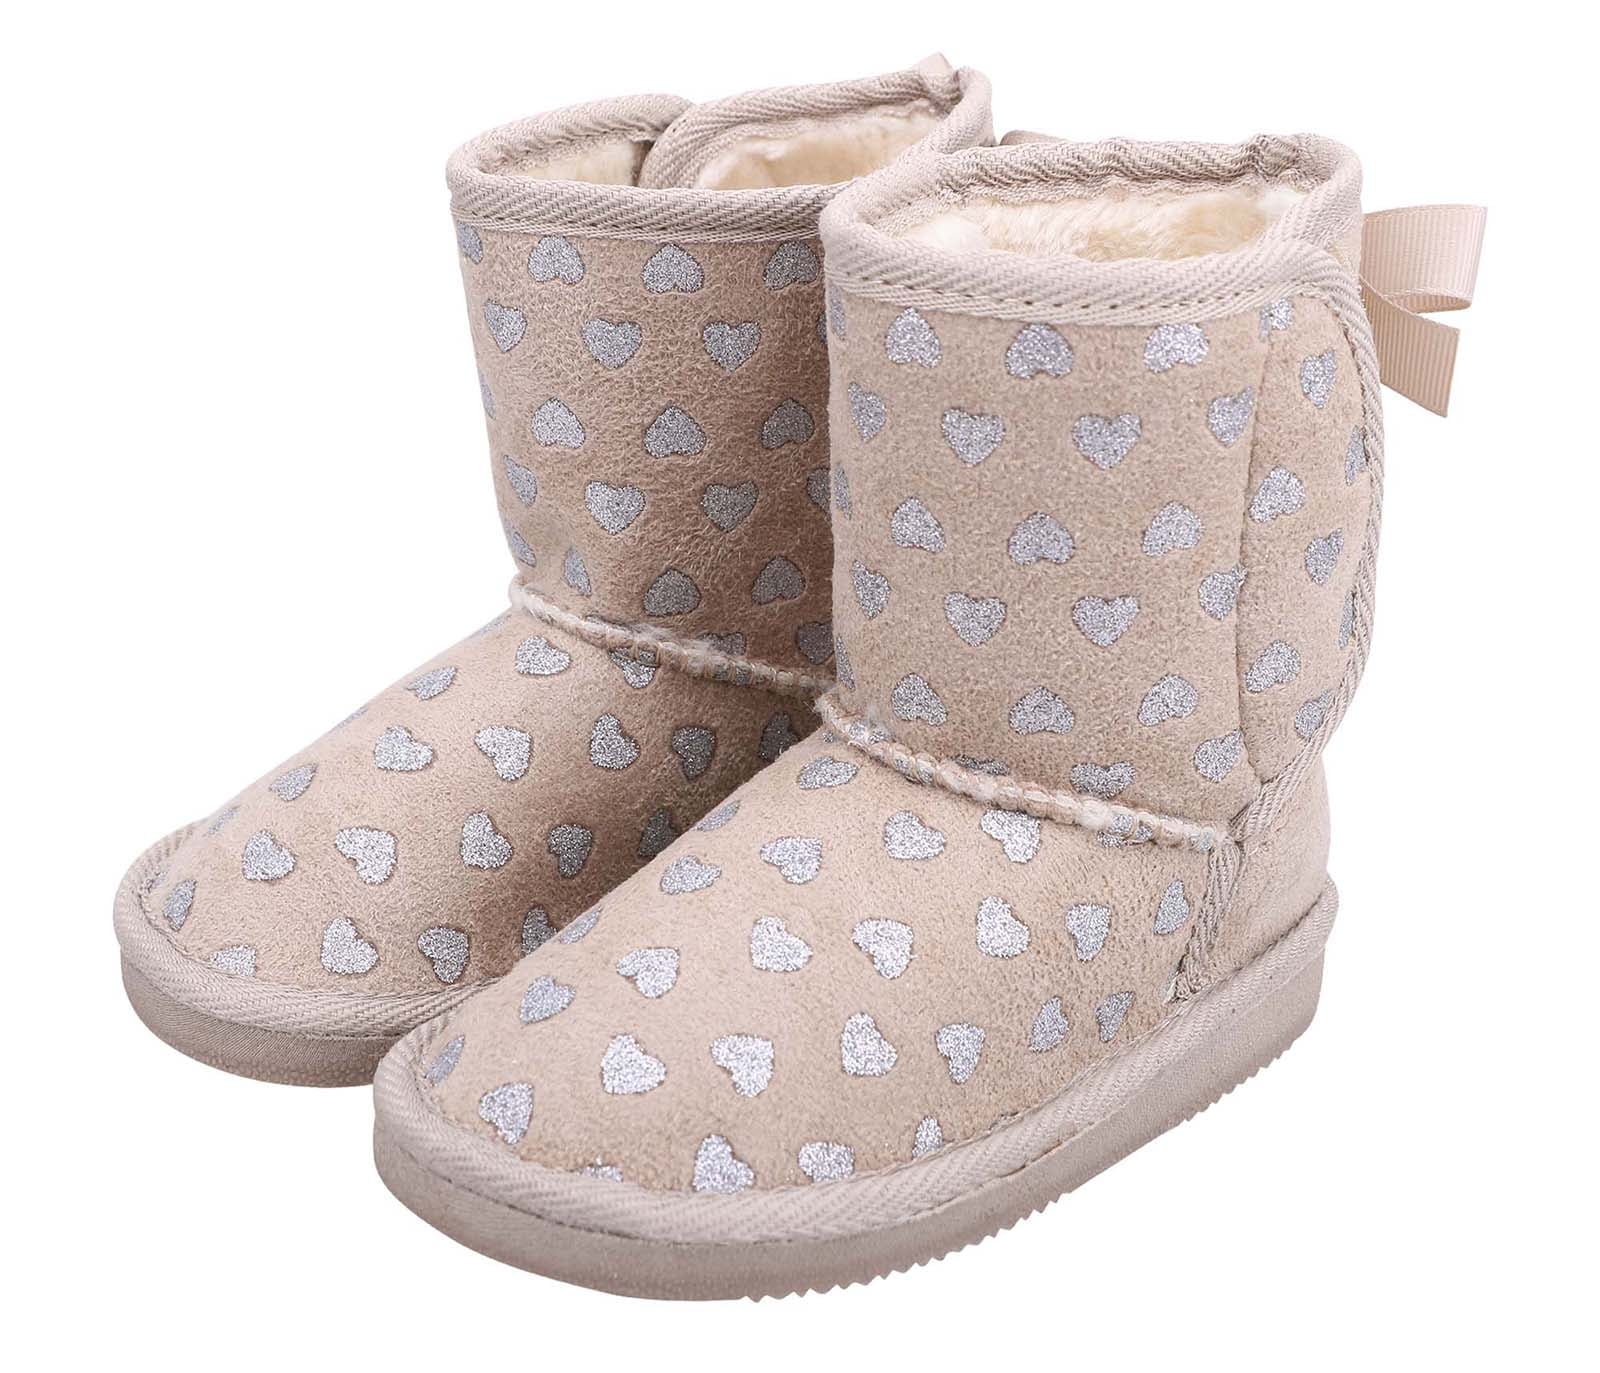 BNWT Little Girls Sz 13 Rivers Doghouse Brand Short Choc Brown Slipper Boots